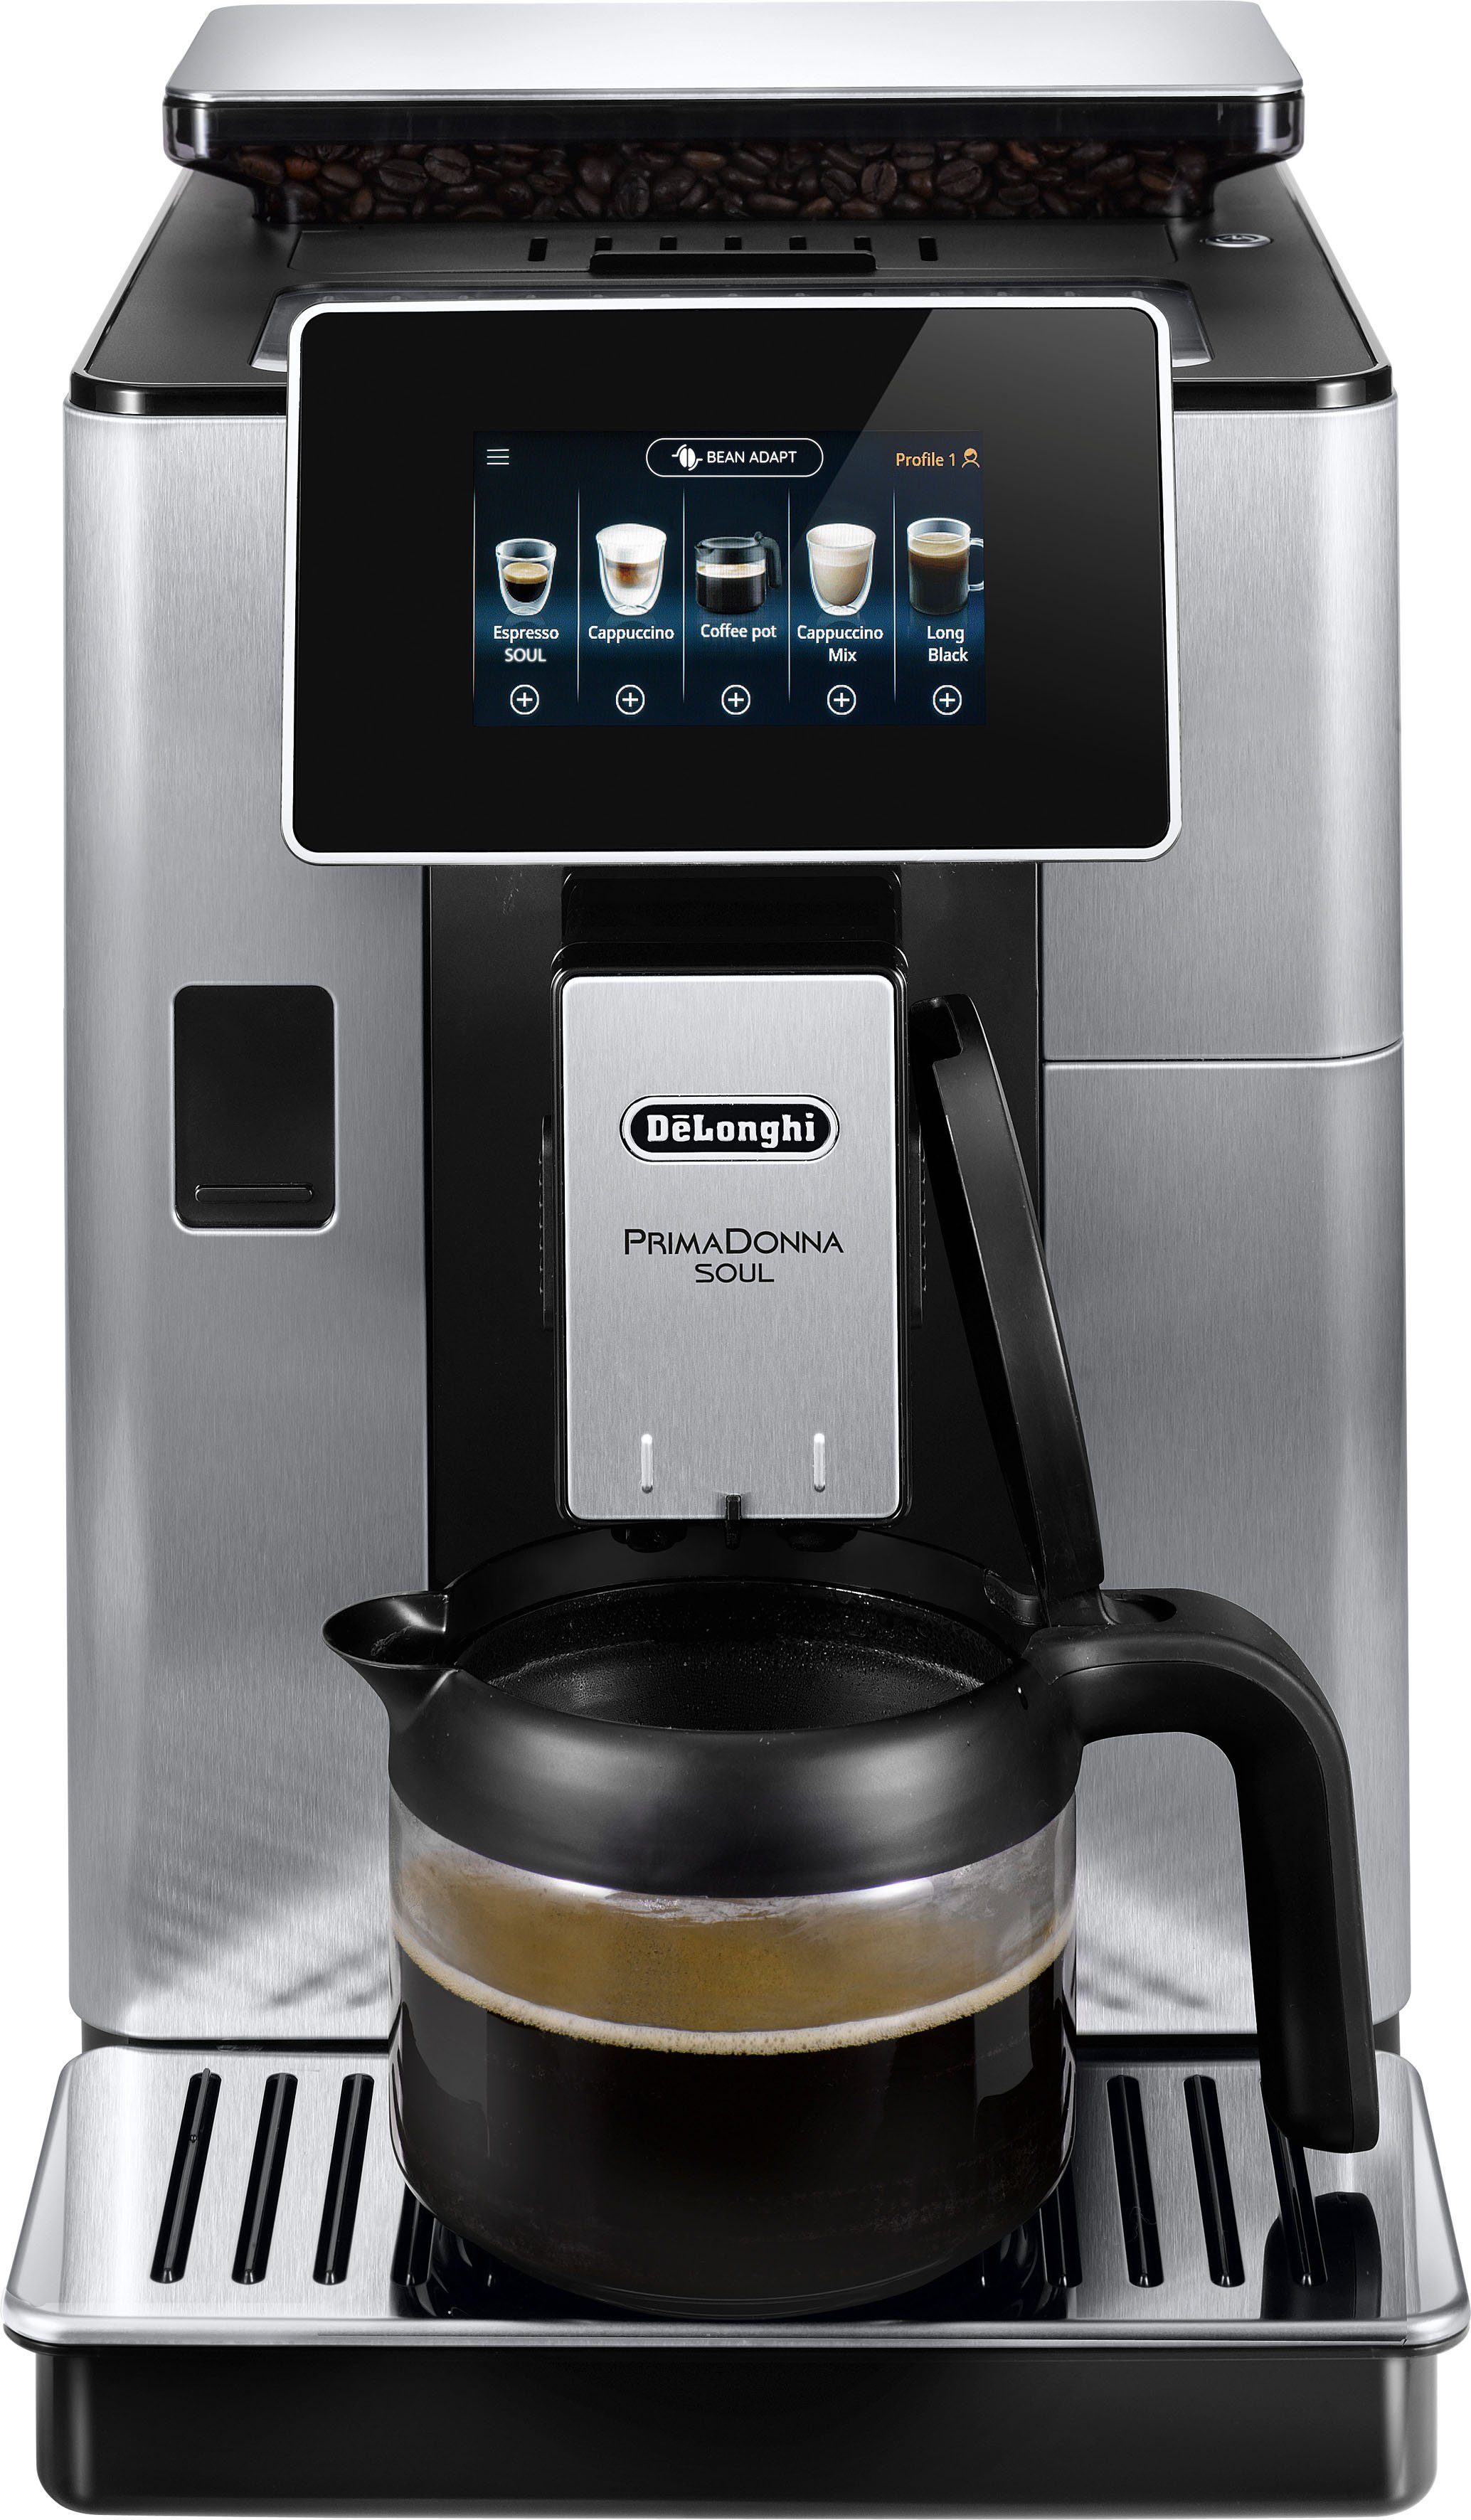 610.75.MB, von ECAM Kaffeevollautomat UVP De'Longhi 46,90 PrimaDonna Wert Kaffeekanne 29,99 Soul + Gläser-Set UVP € im € inkl.